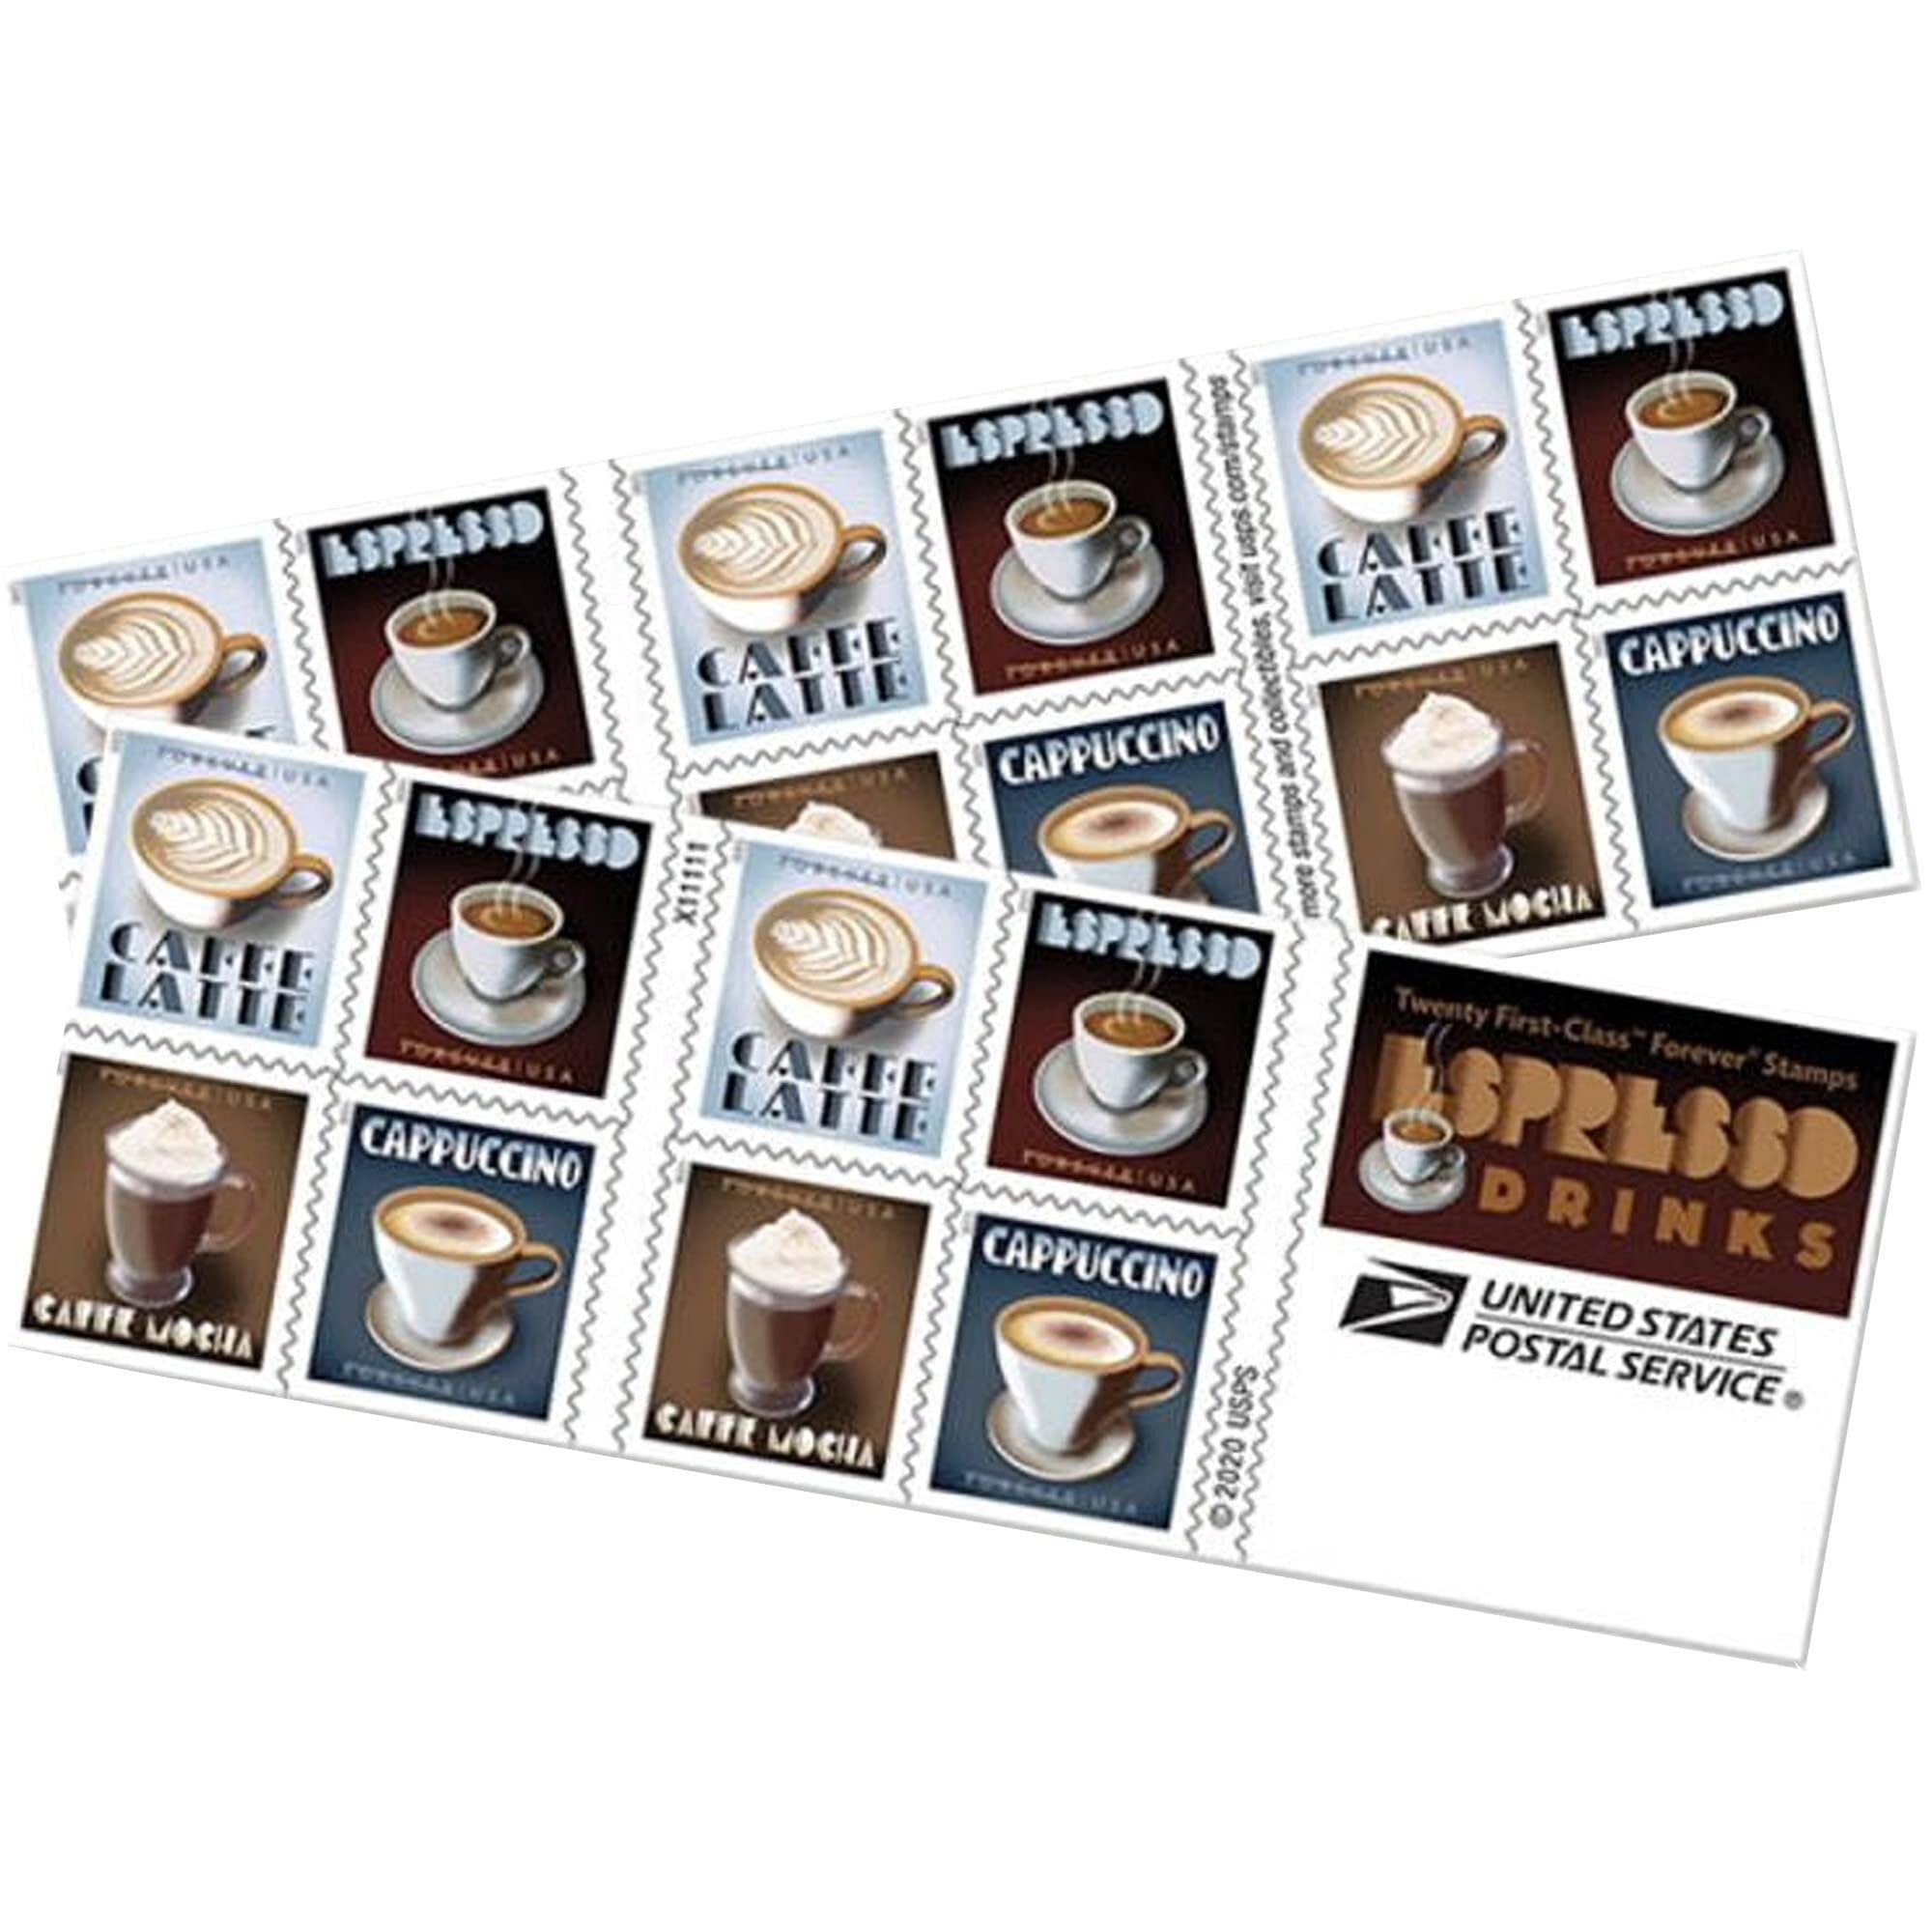 Espresso Drinks US Postage Stamps - Booklet of 20,Wedding